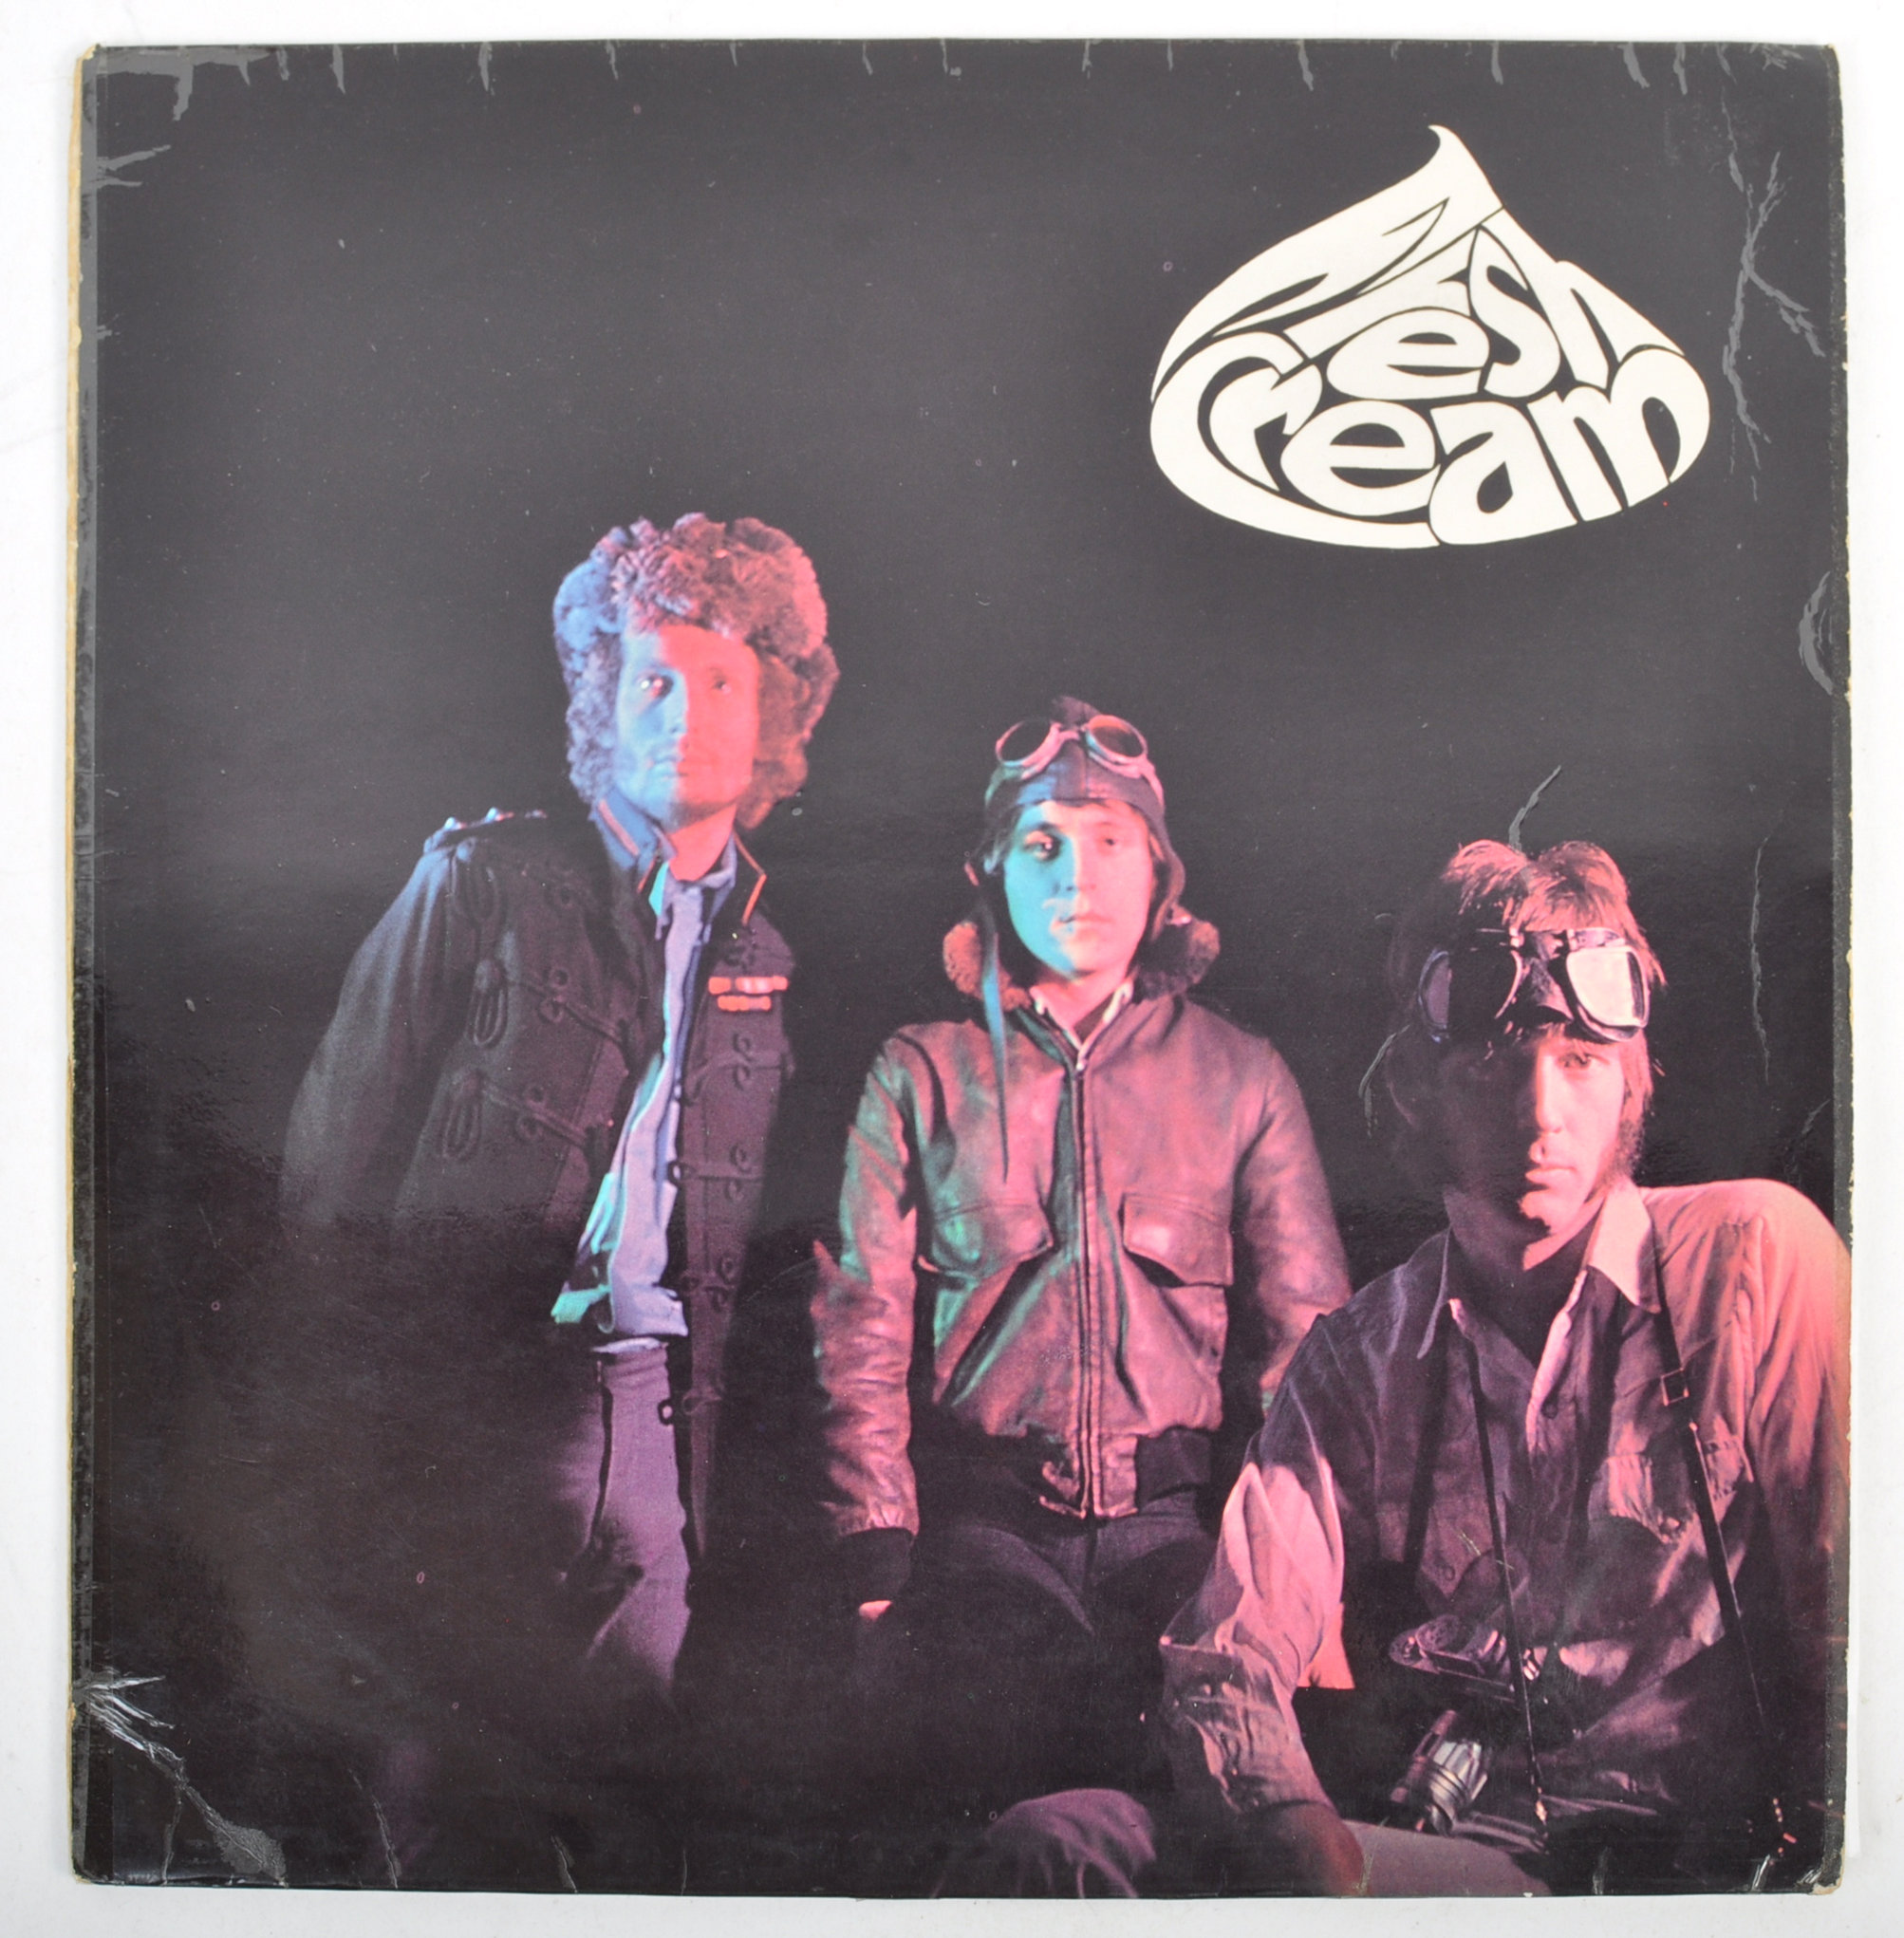 Cream - Fresh Cream - Released 1966 Reaction Label - A vinyl long play ...